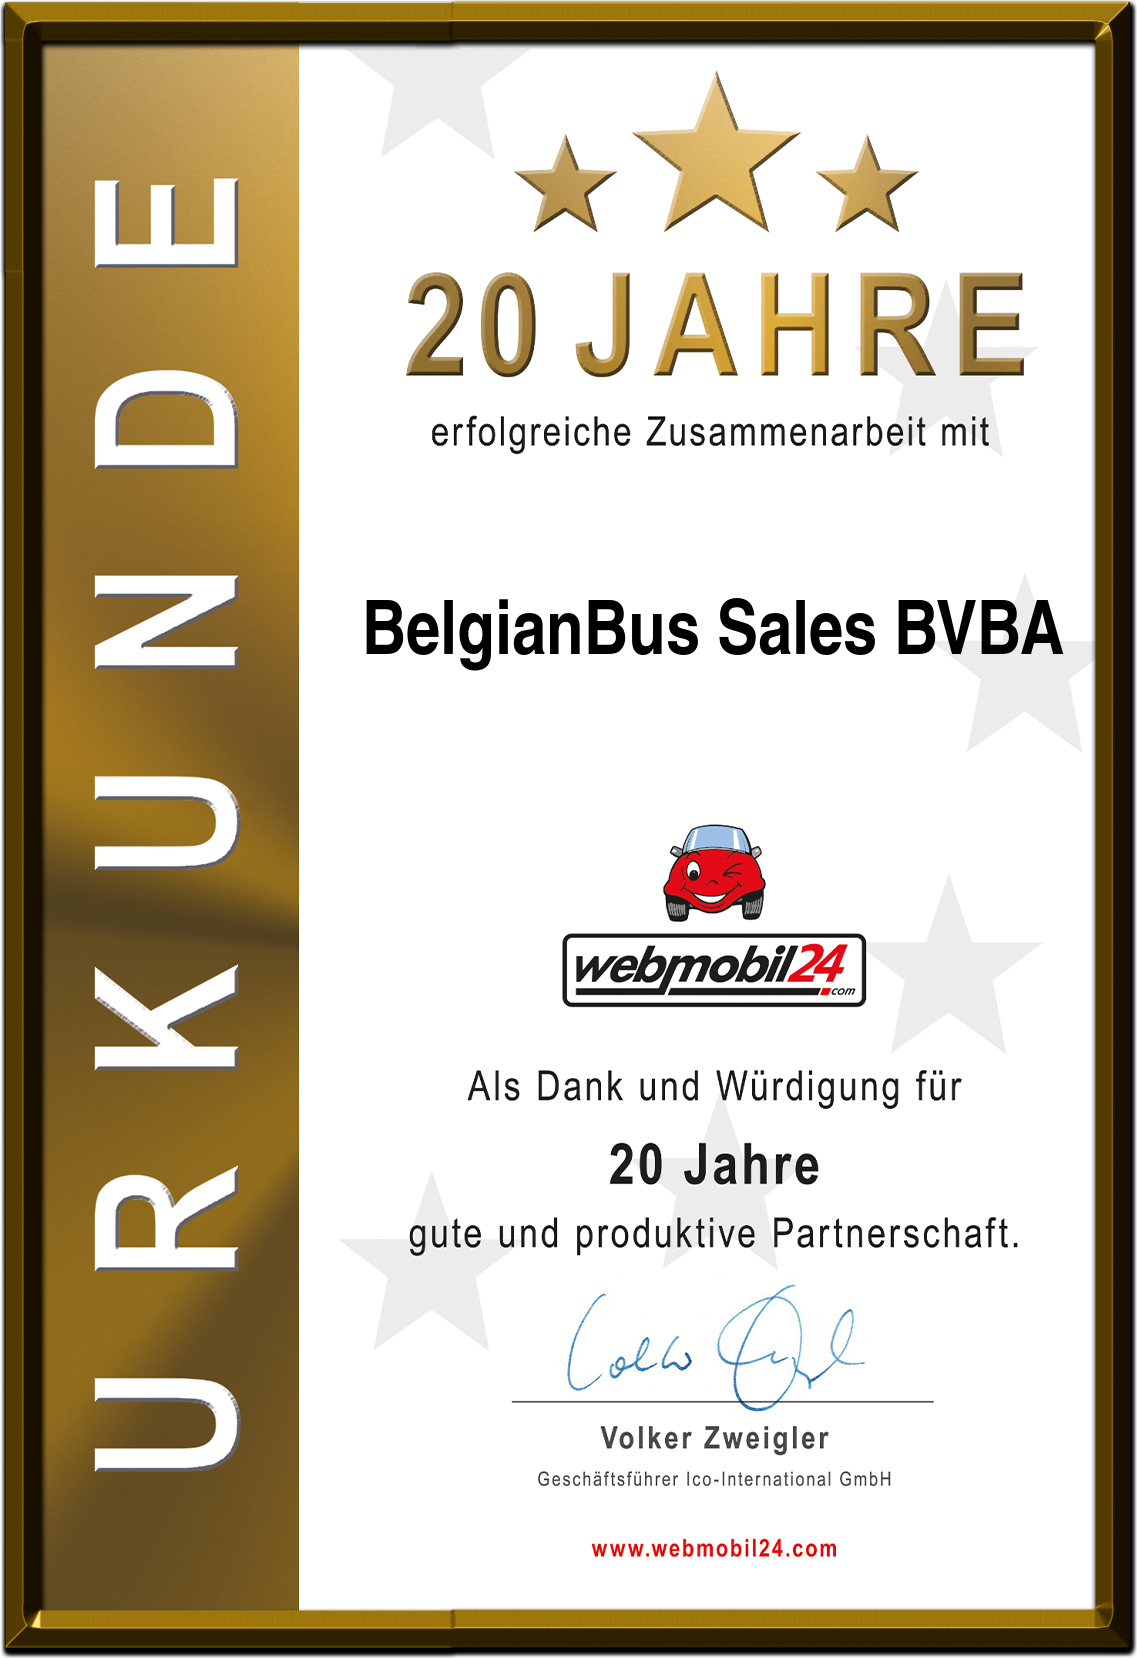 BelgianBus Sales BVBA